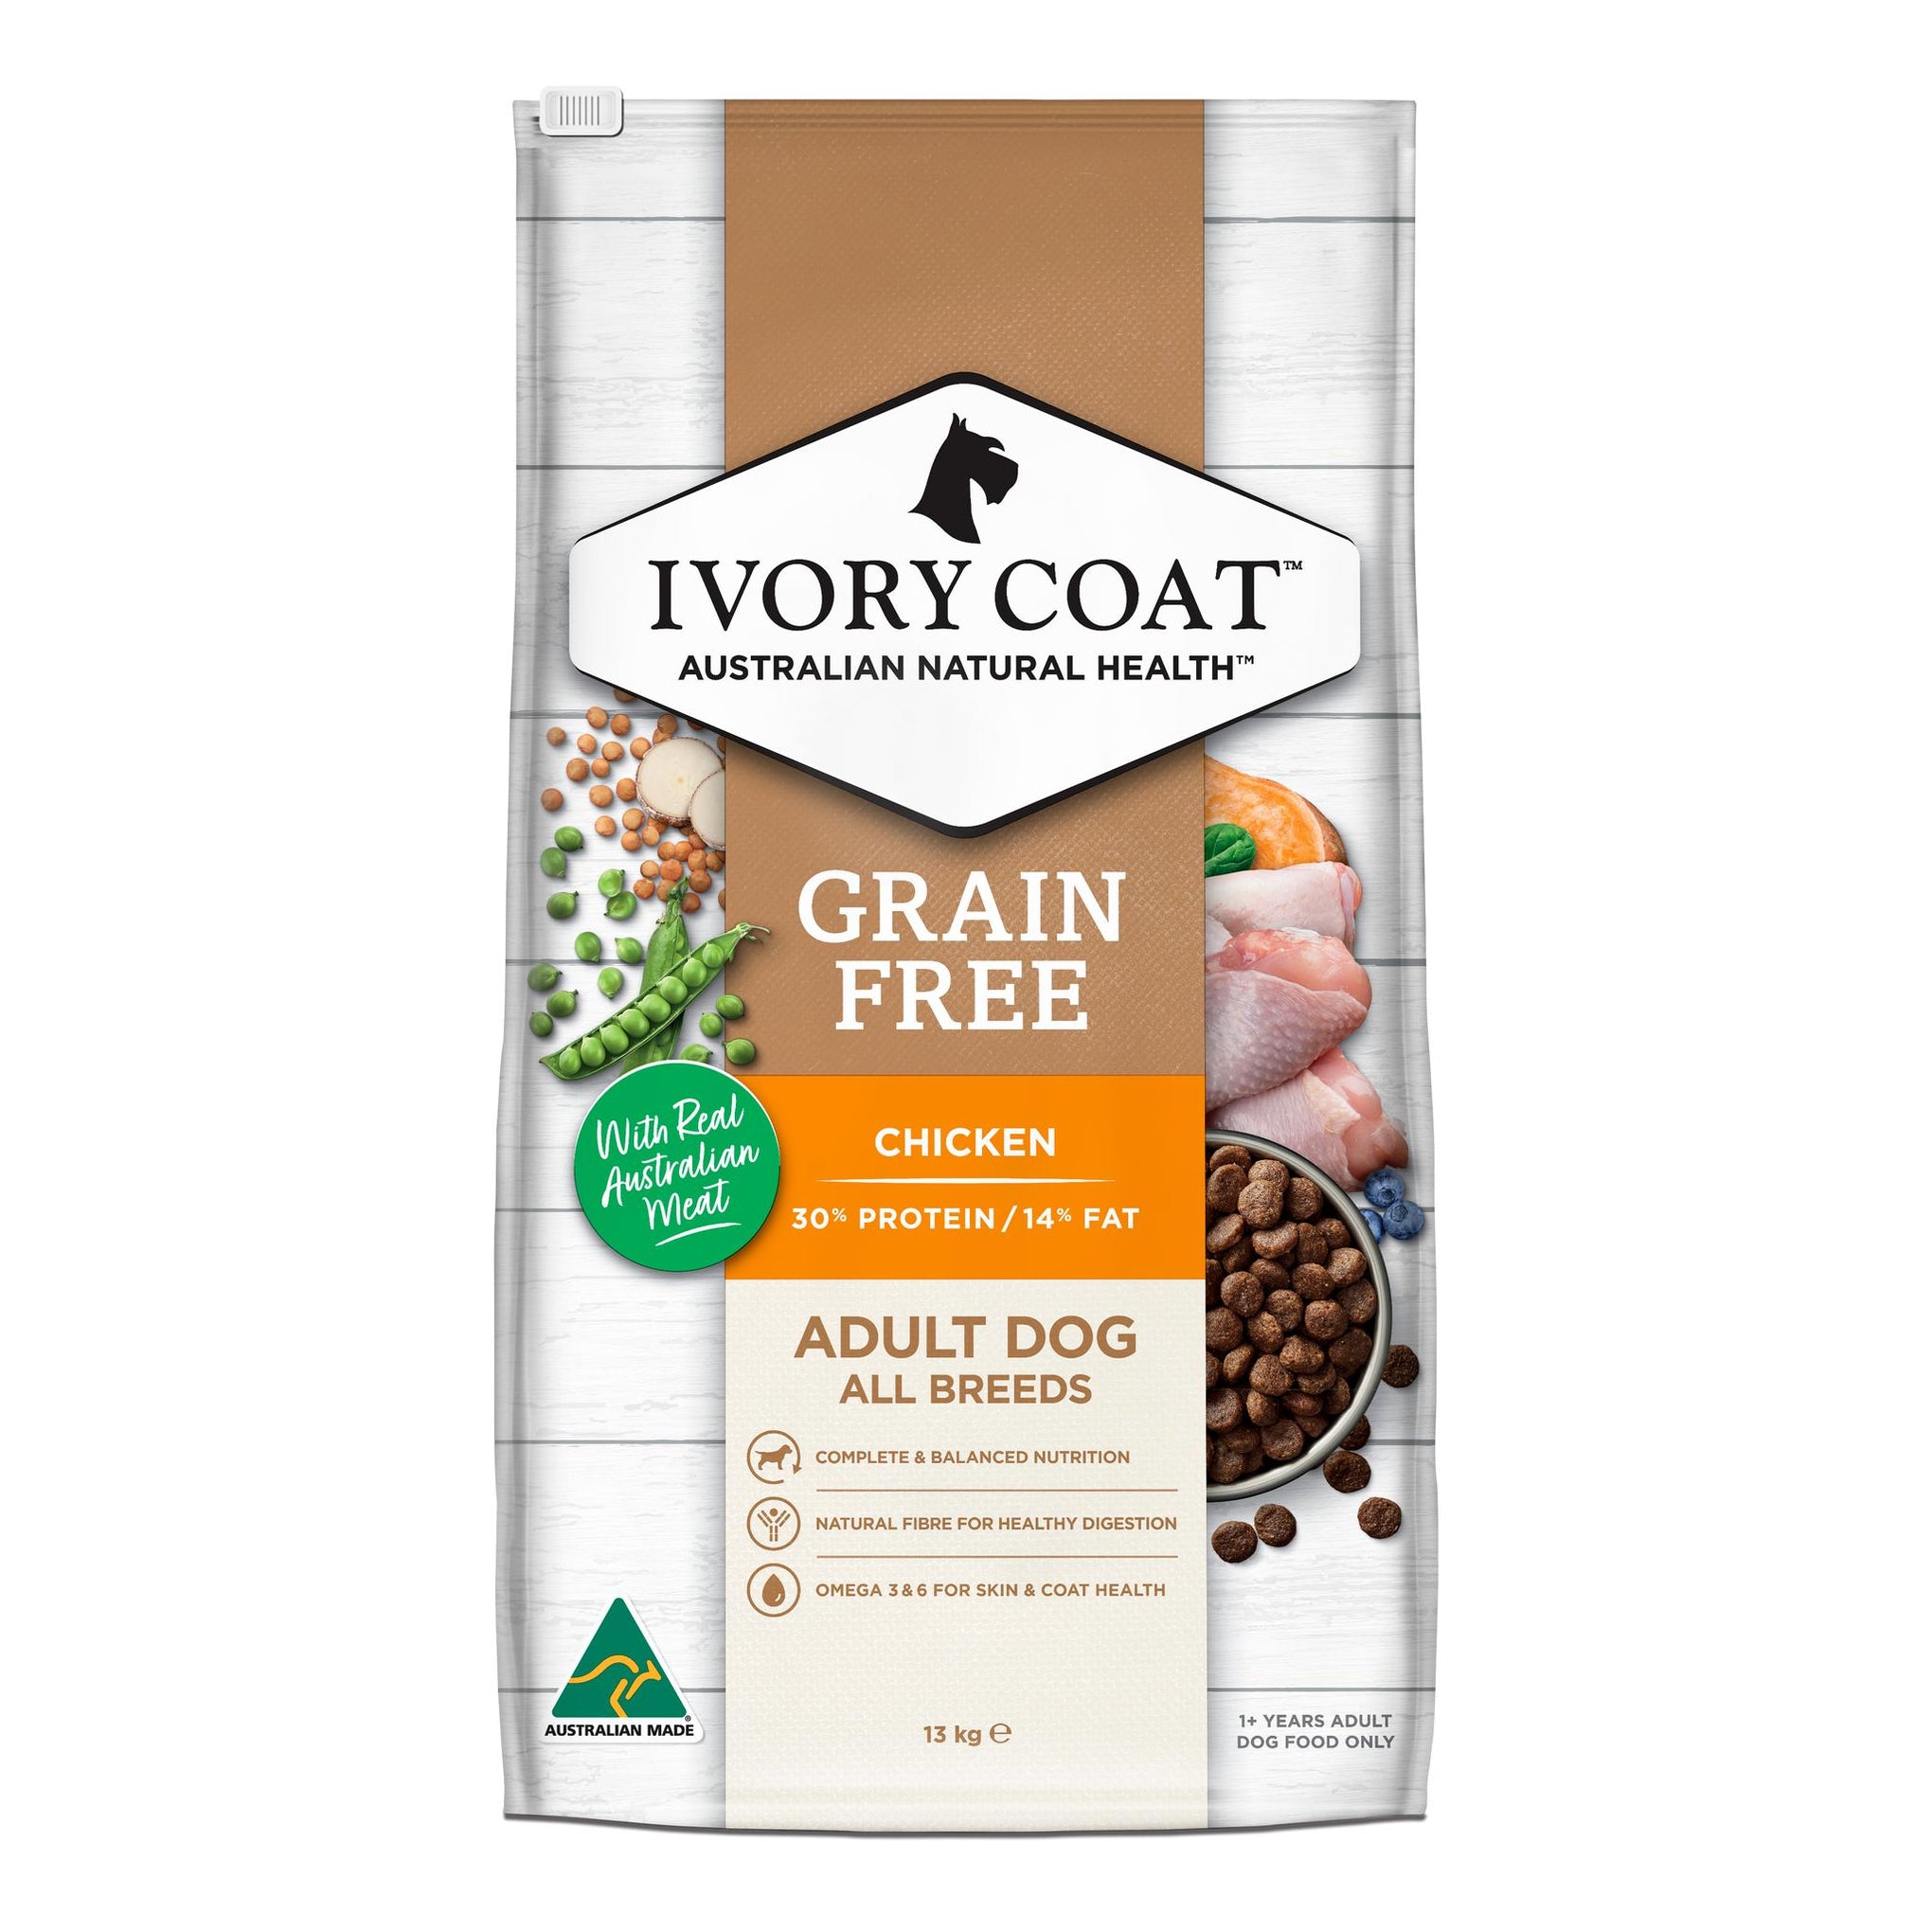 Ivory Coat Grain Free Adult Chicken Dry Dog Food